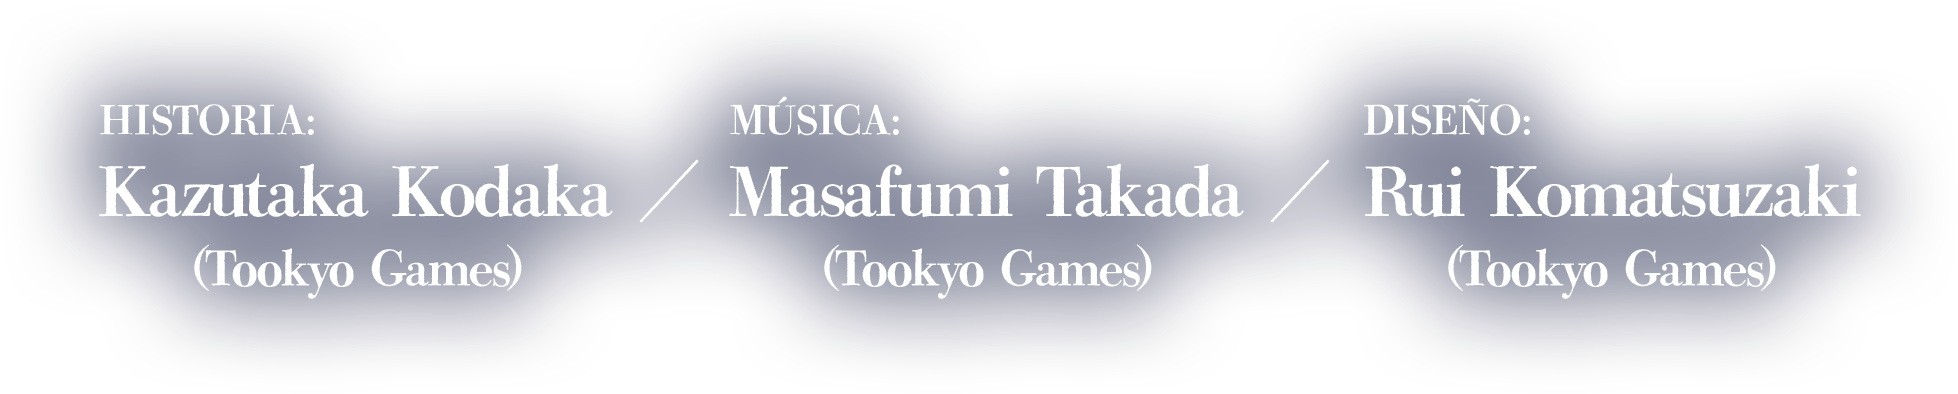 Historia:Kazutaka Kodaka (Tookyo Games)Música:Masafumi Takada (Tookyo Games)Diseño:Rui Komatsuzaki (Tookyo Games)